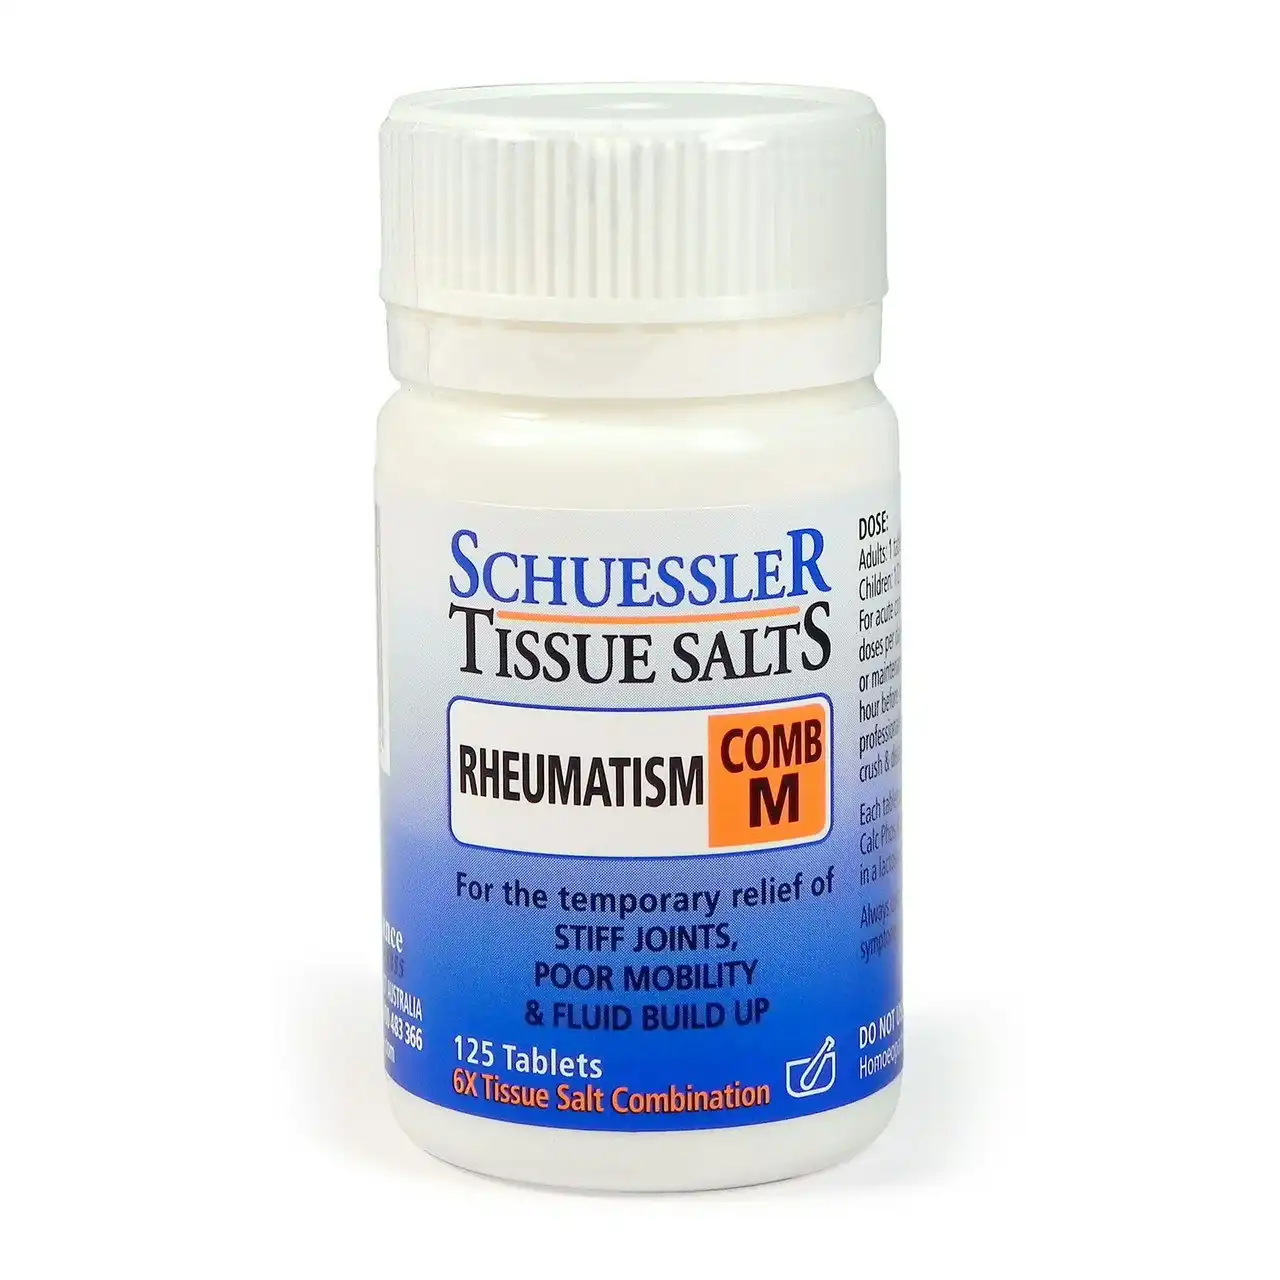 Schuessler Tissue Salts Rheumatism Comb M 125 Tablets